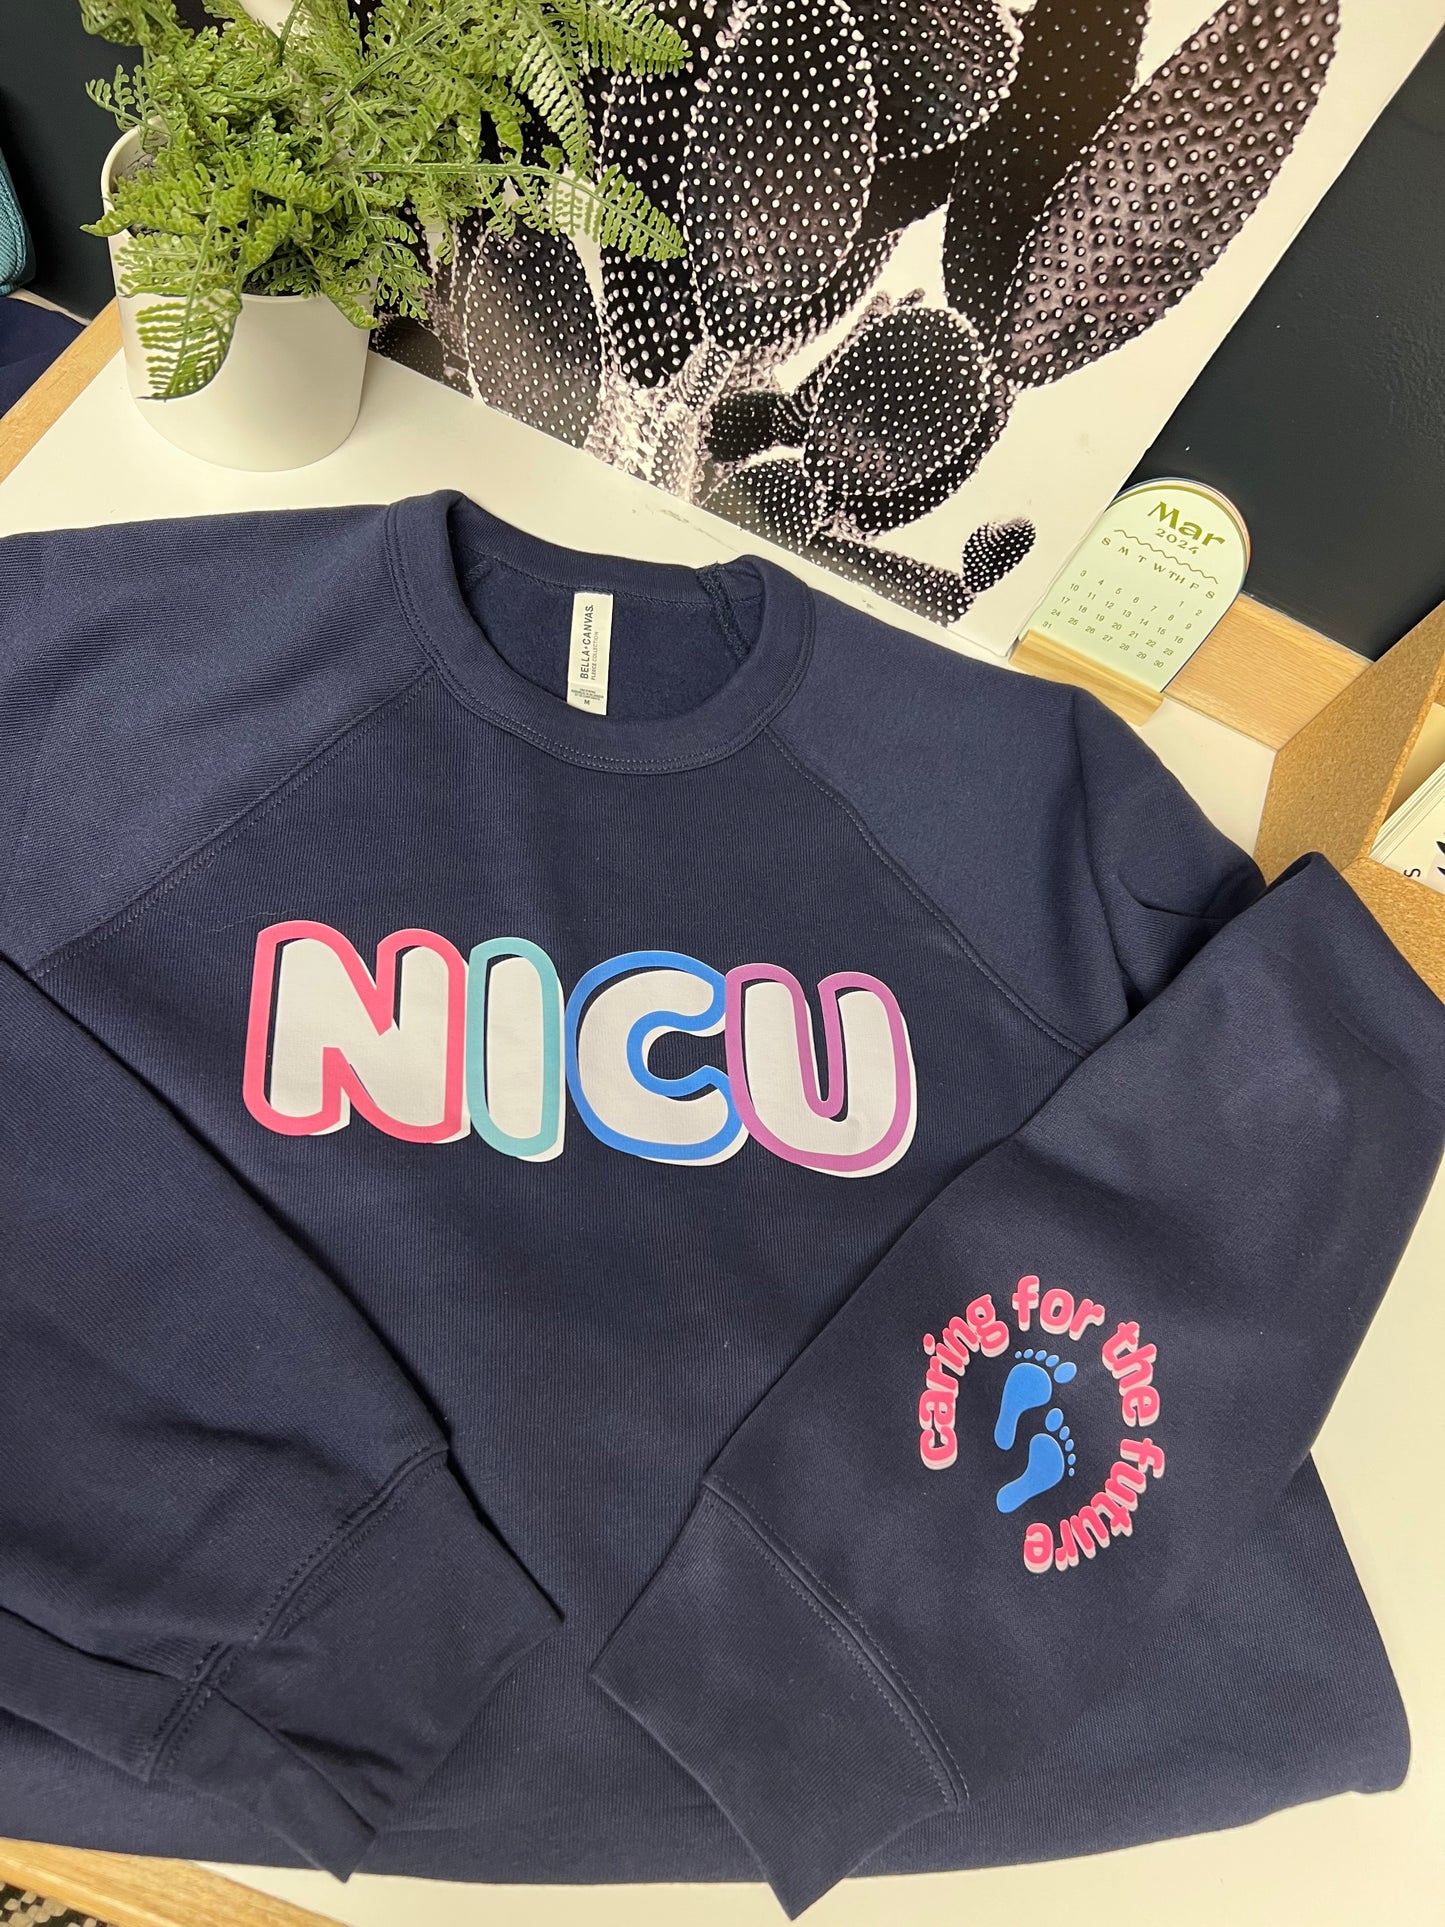 NICU-Caring for the future